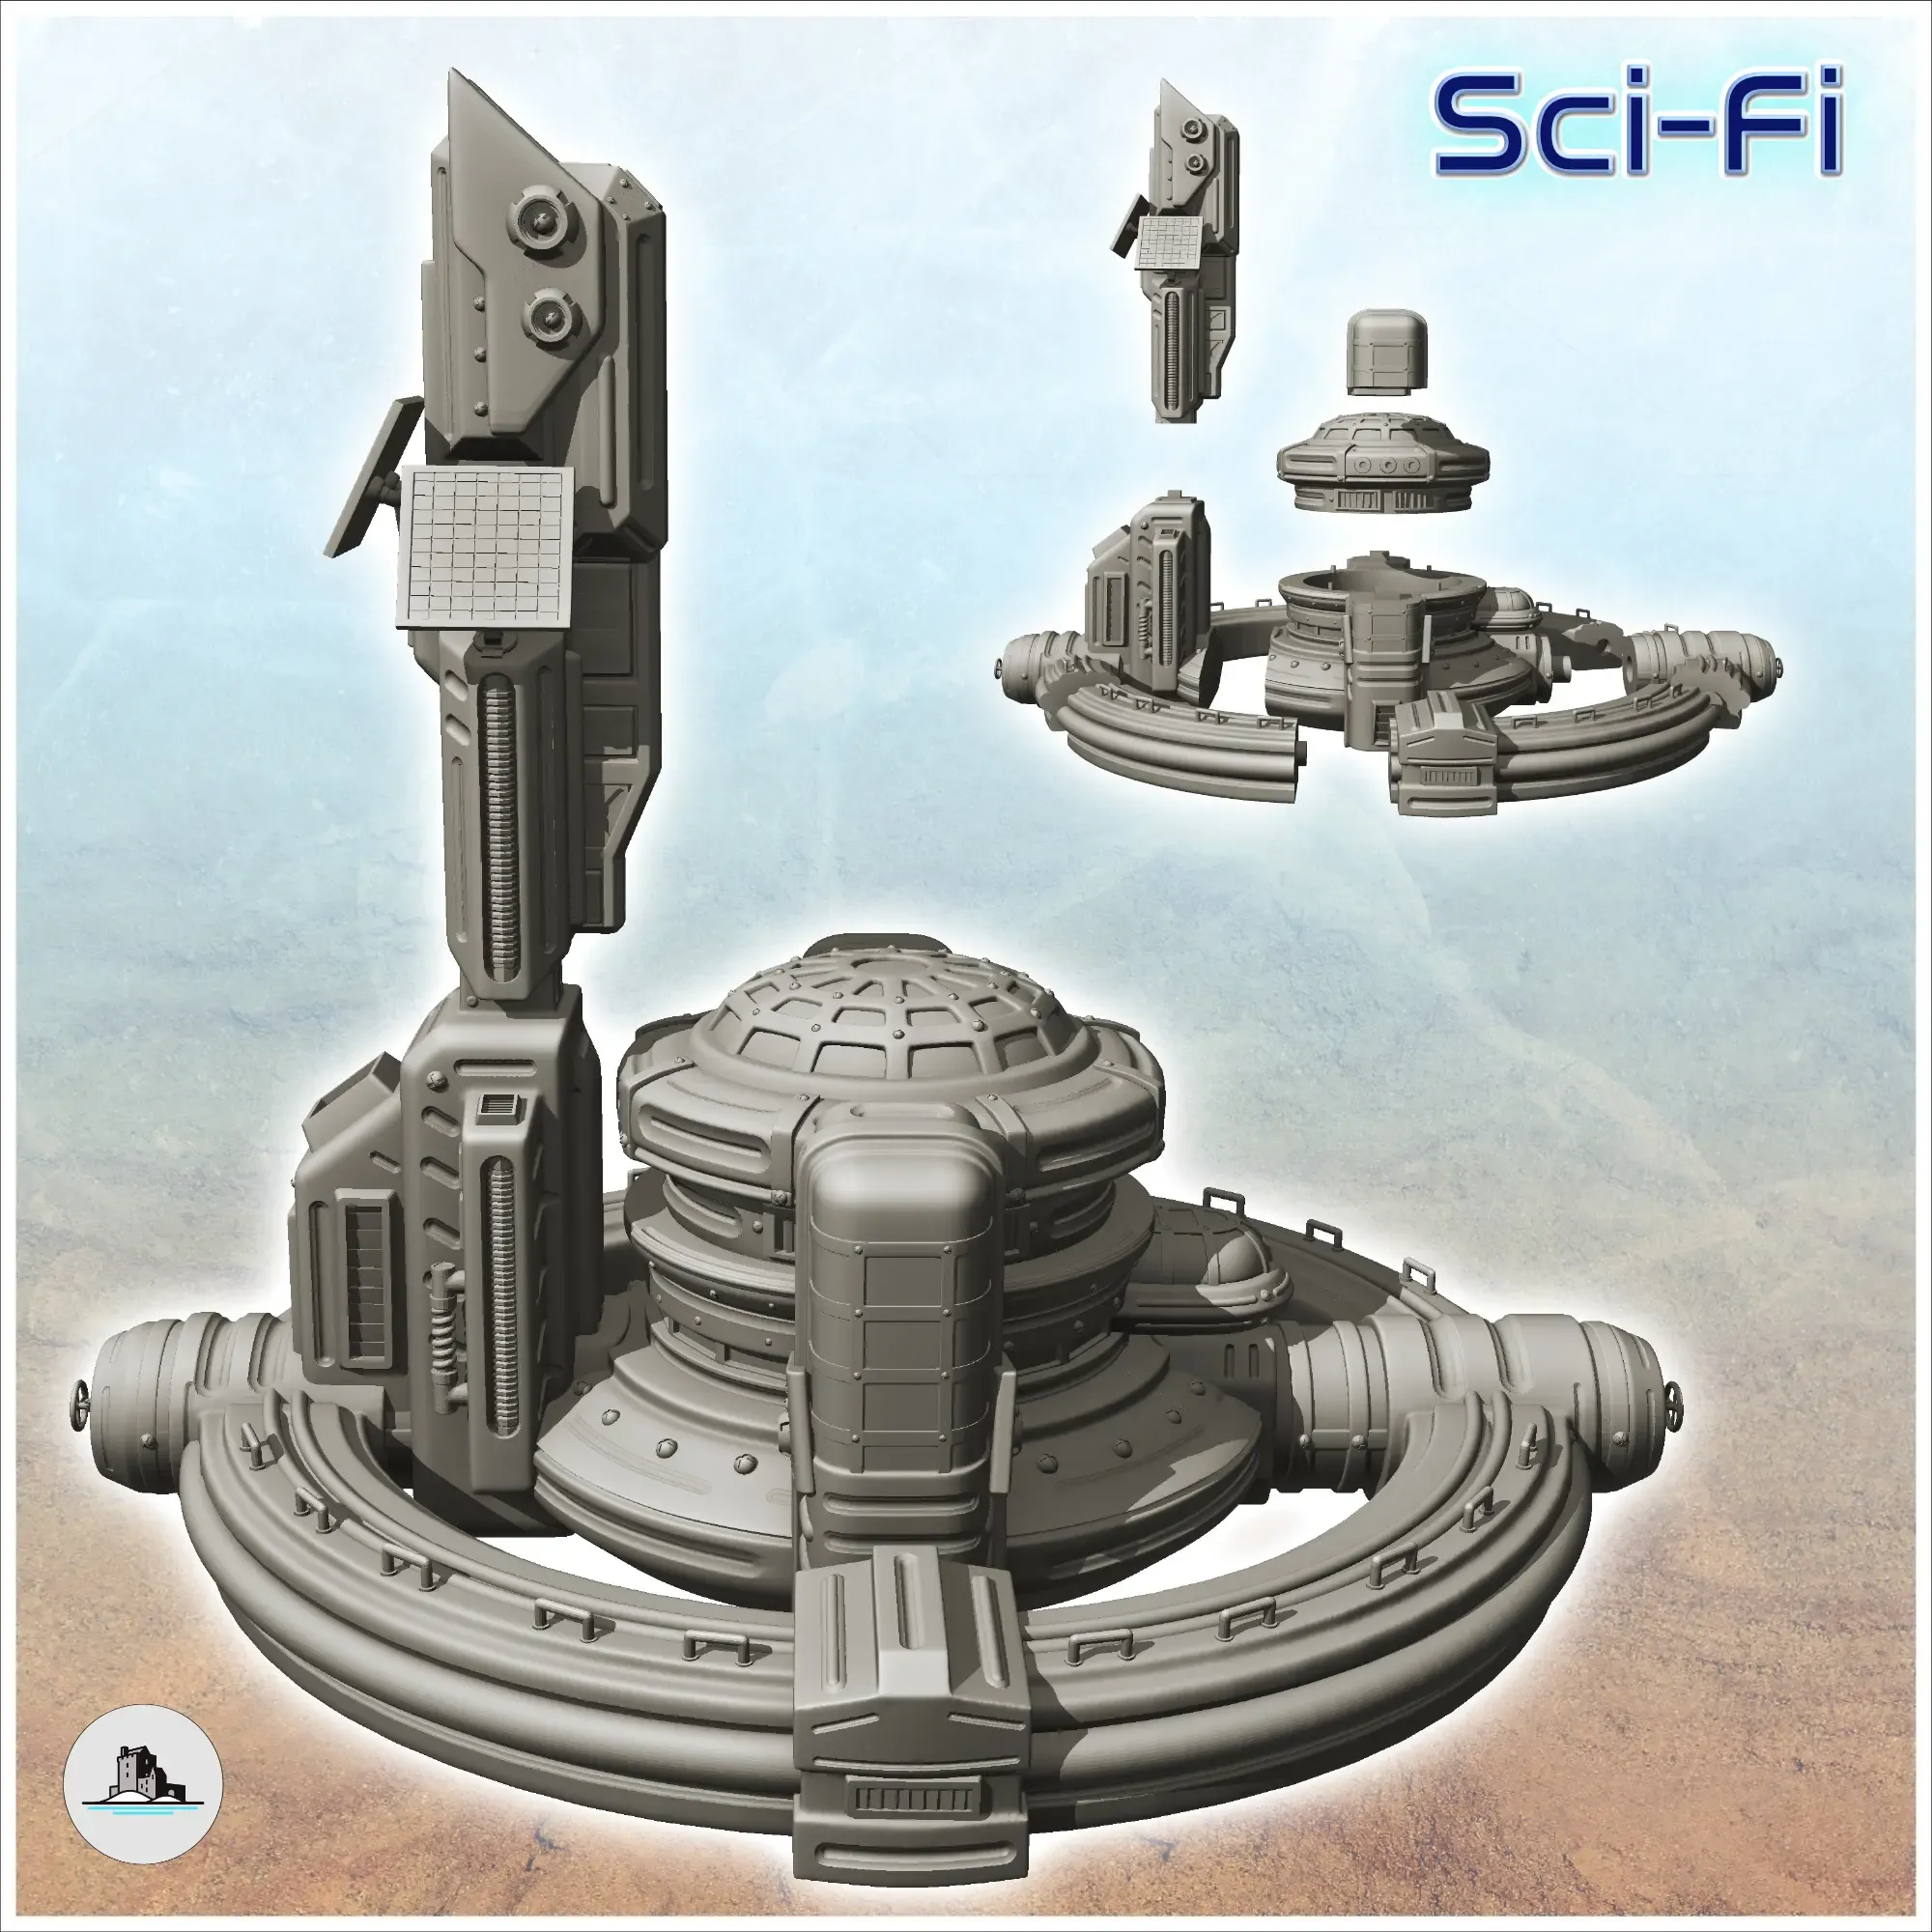 Large circular base - Terrain Scifi Science fiction SF